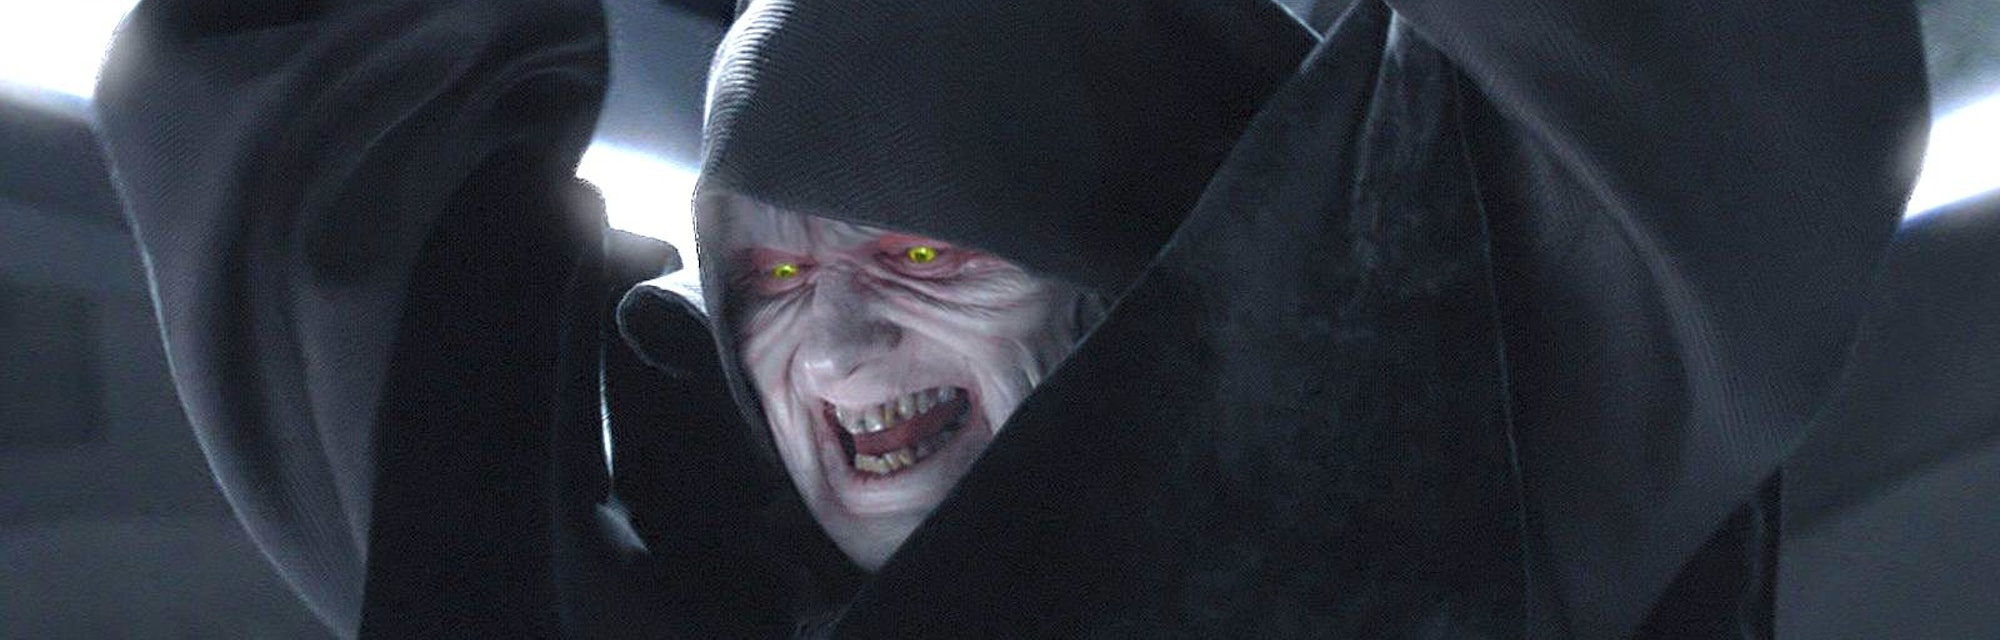 Star Wars Prequels Theory Reveals A Shocking Villain Worse Than